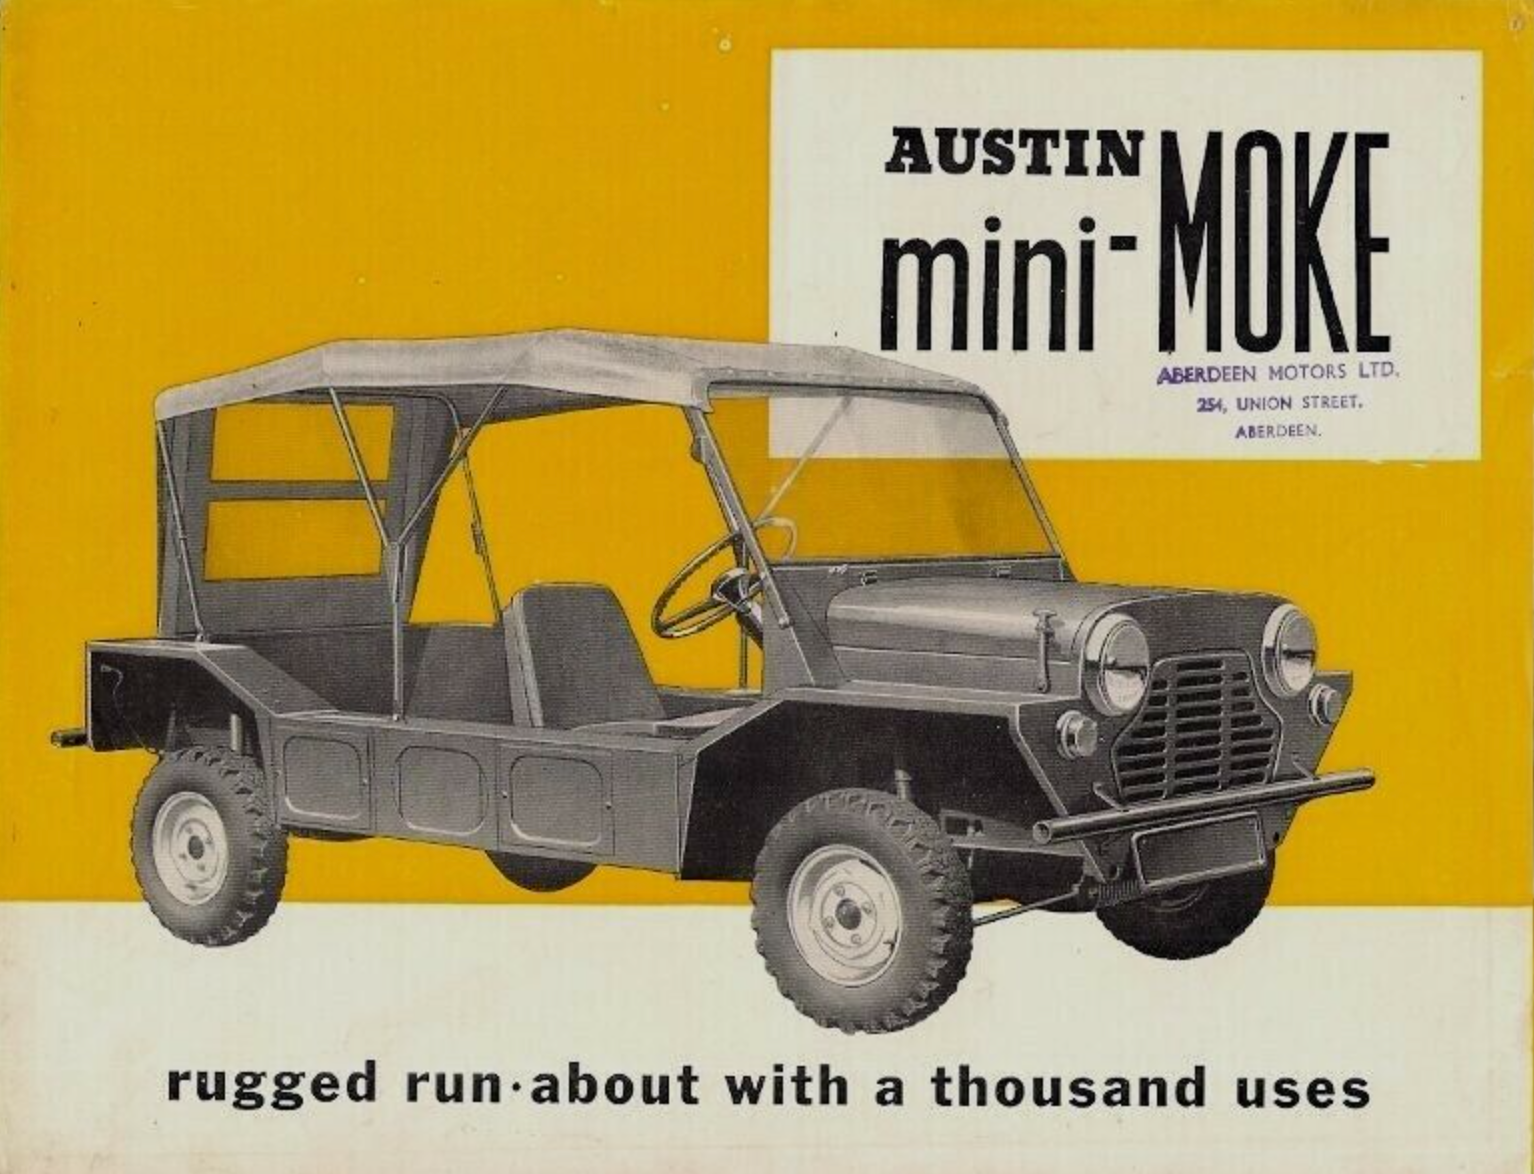 Austin Mini Moke Anglozine